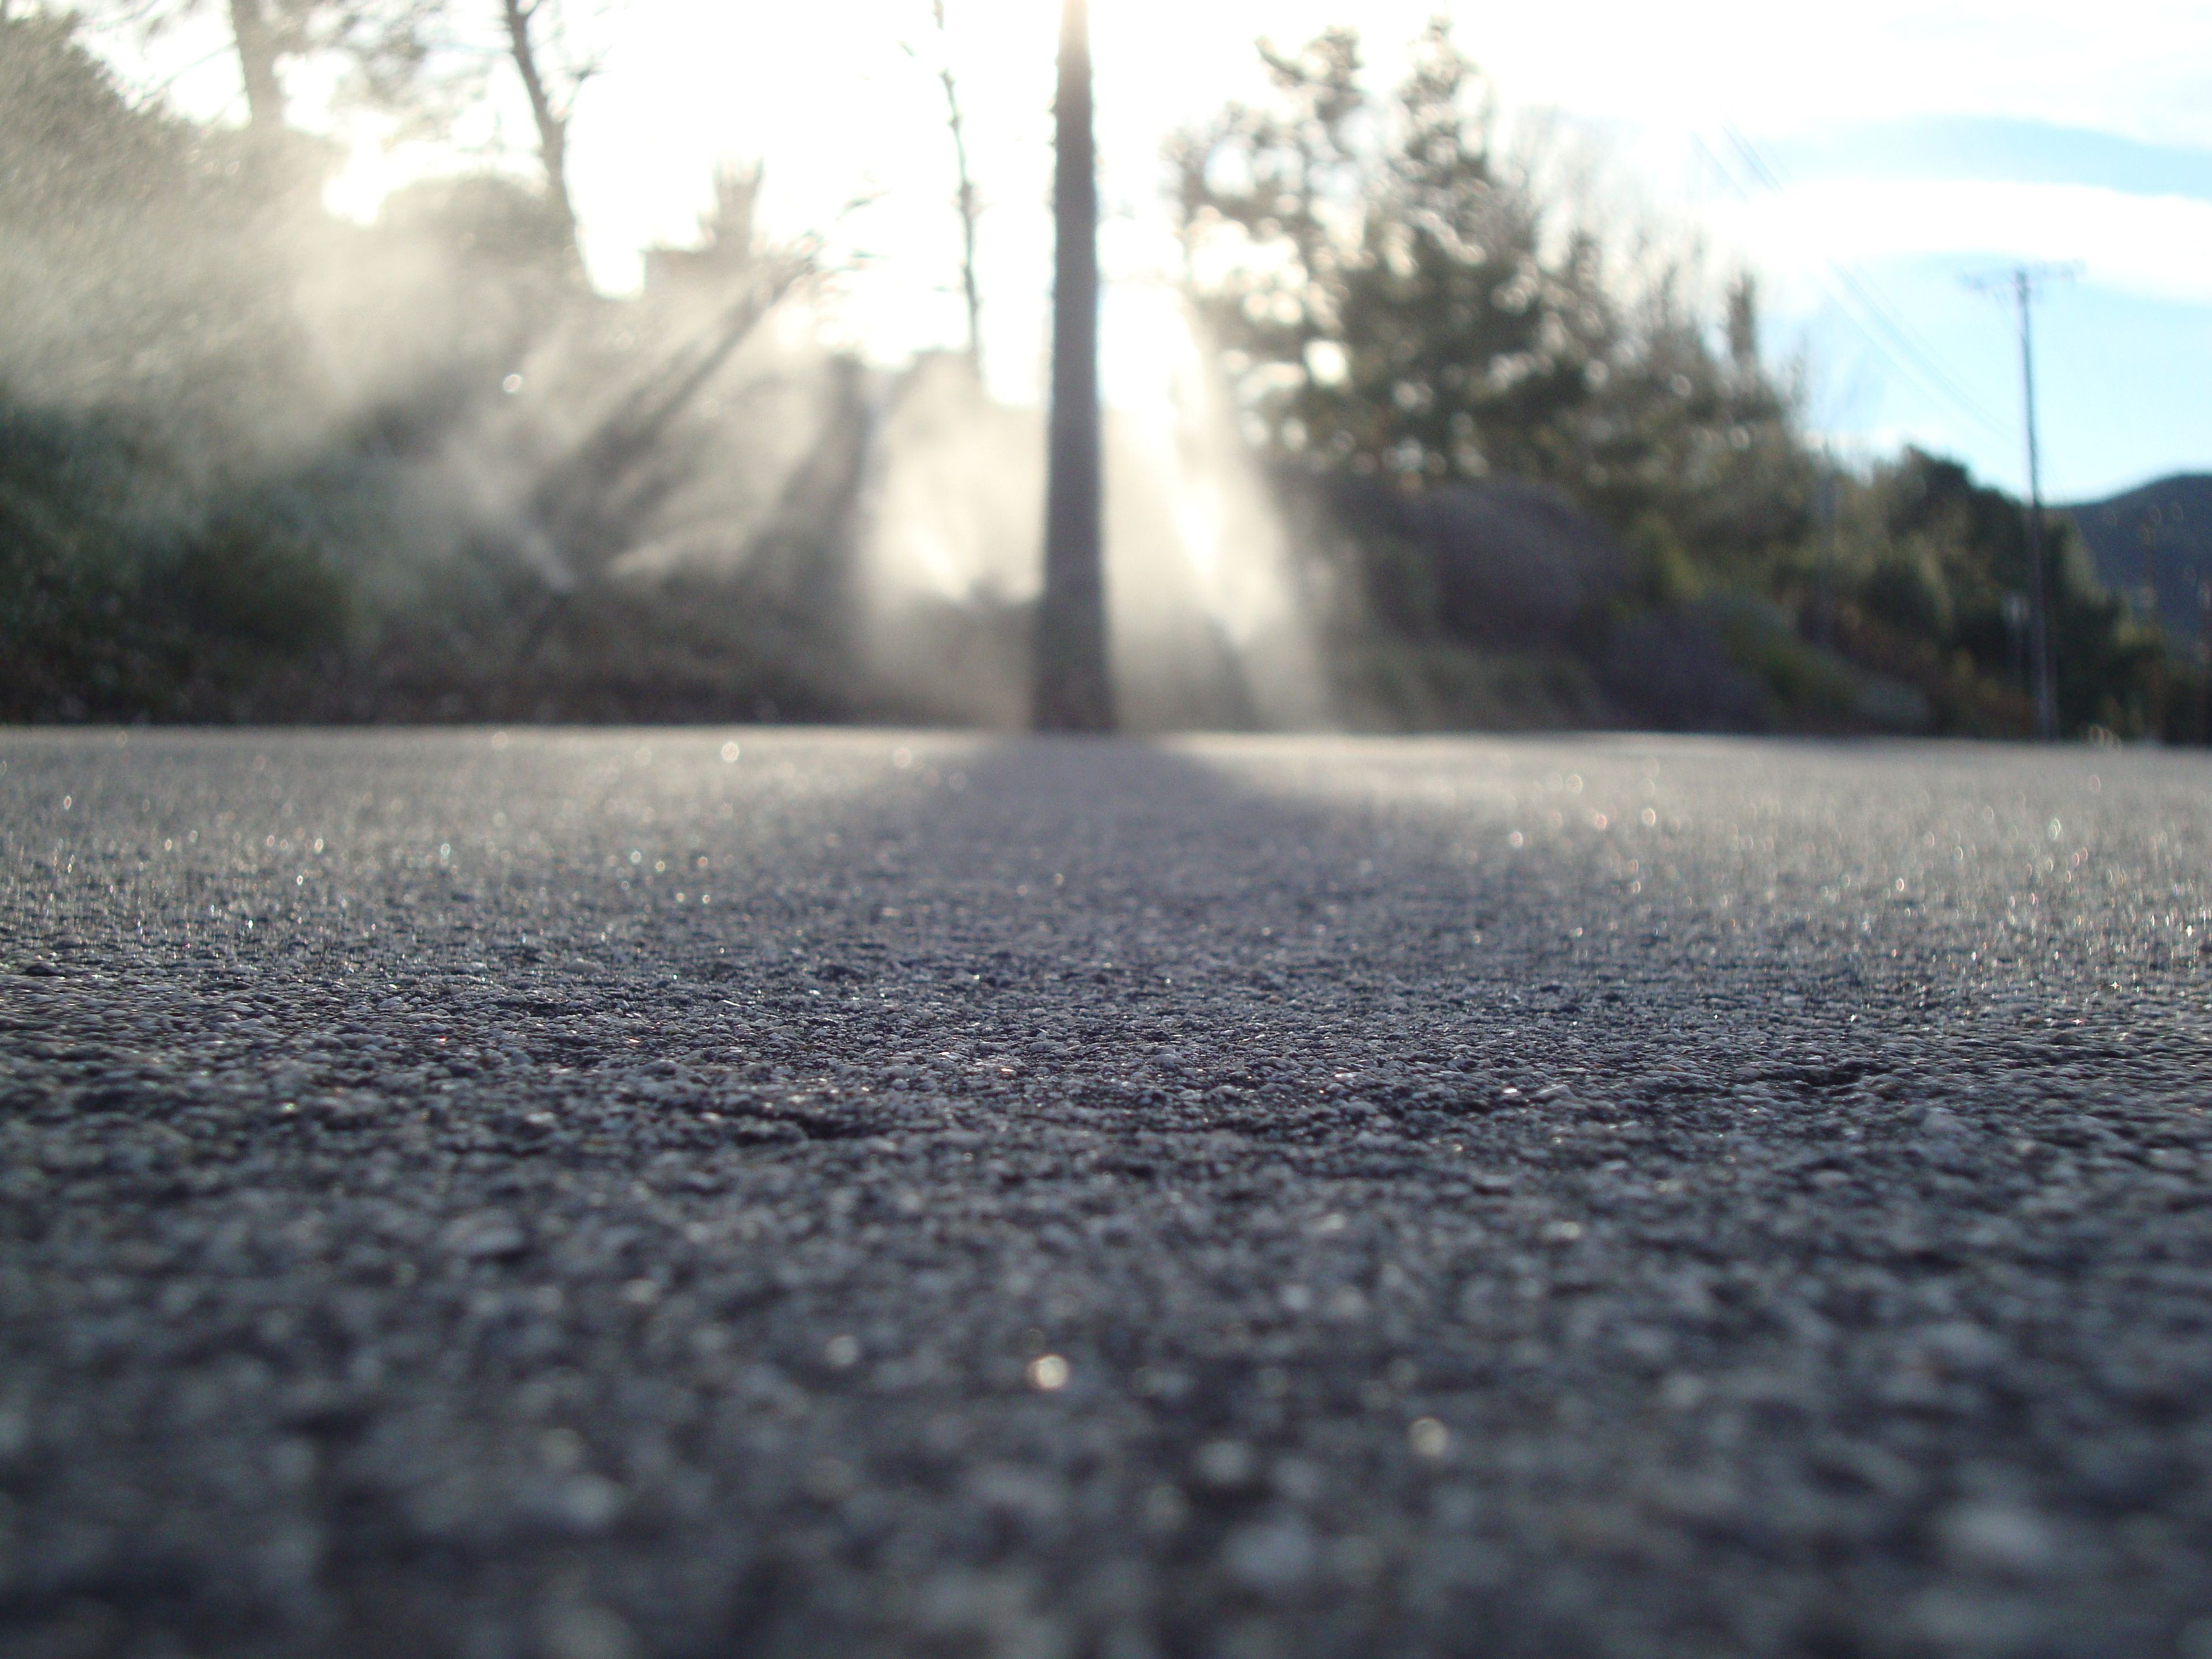 An asphalt road lit by early-morning sunlight.